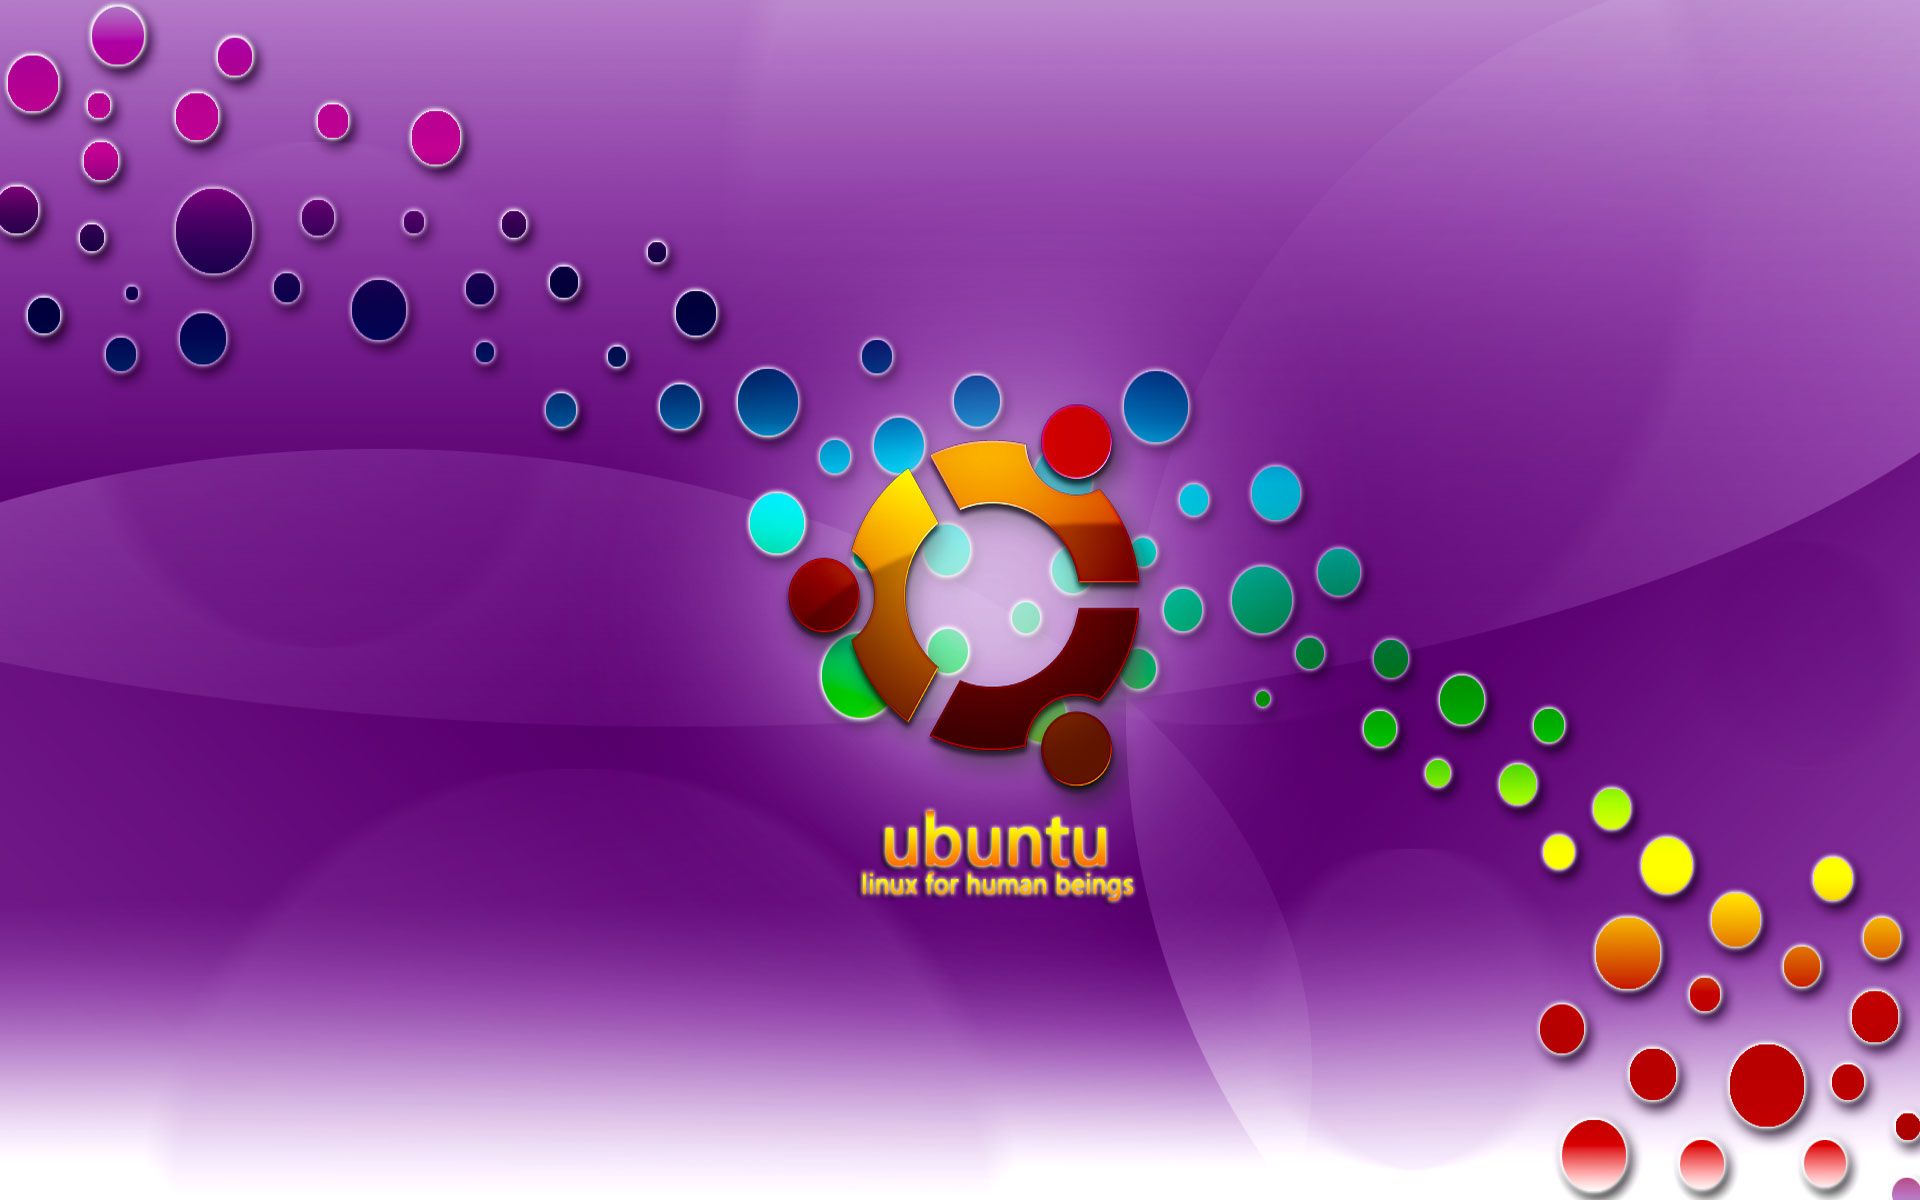 HD wallpaper, Ubuntu, Background